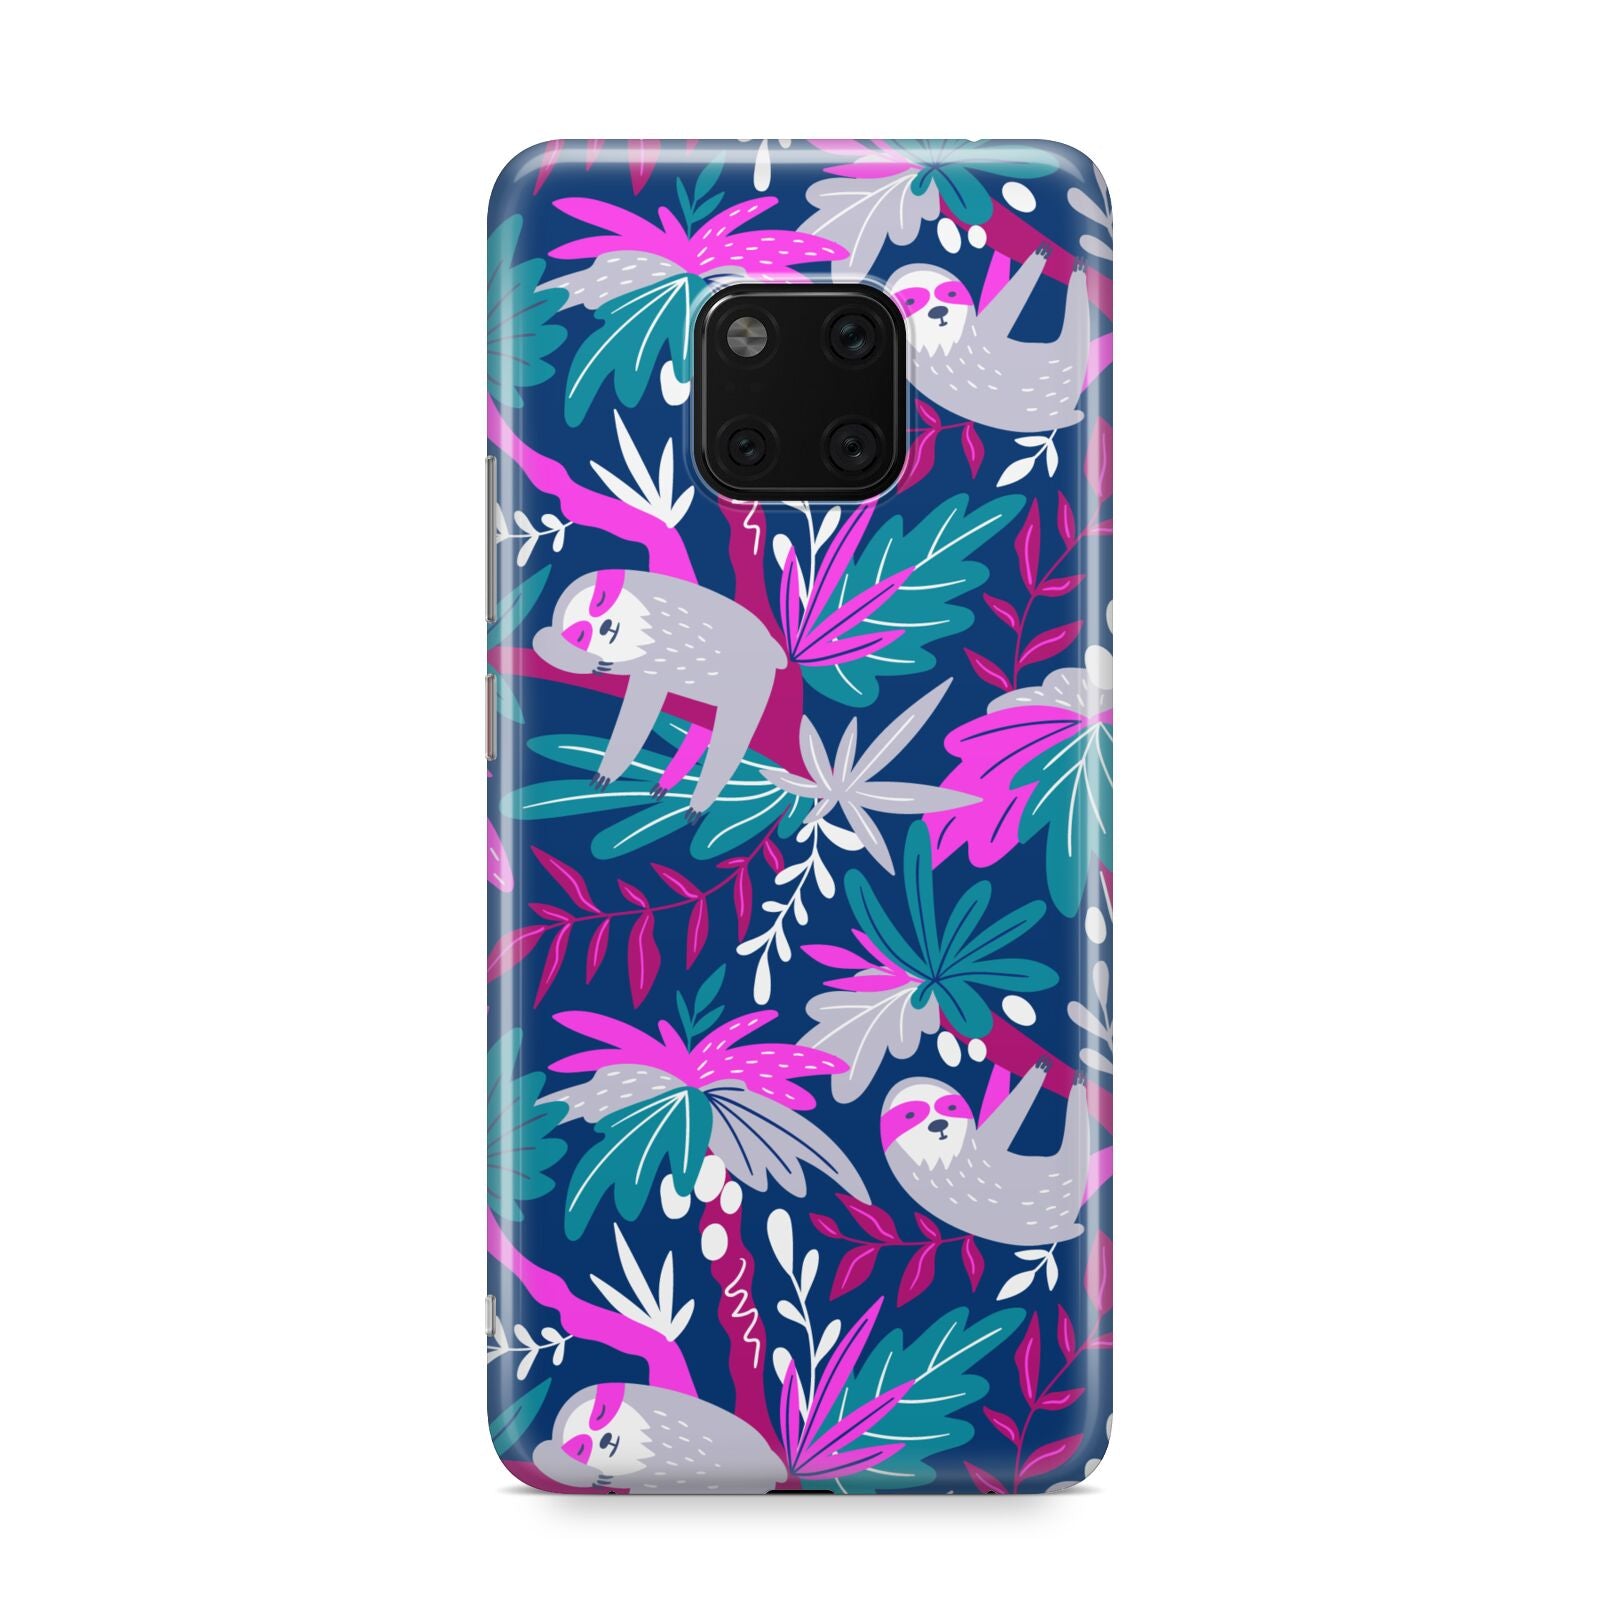 Sloth Huawei Mate 20 Pro Phone Case